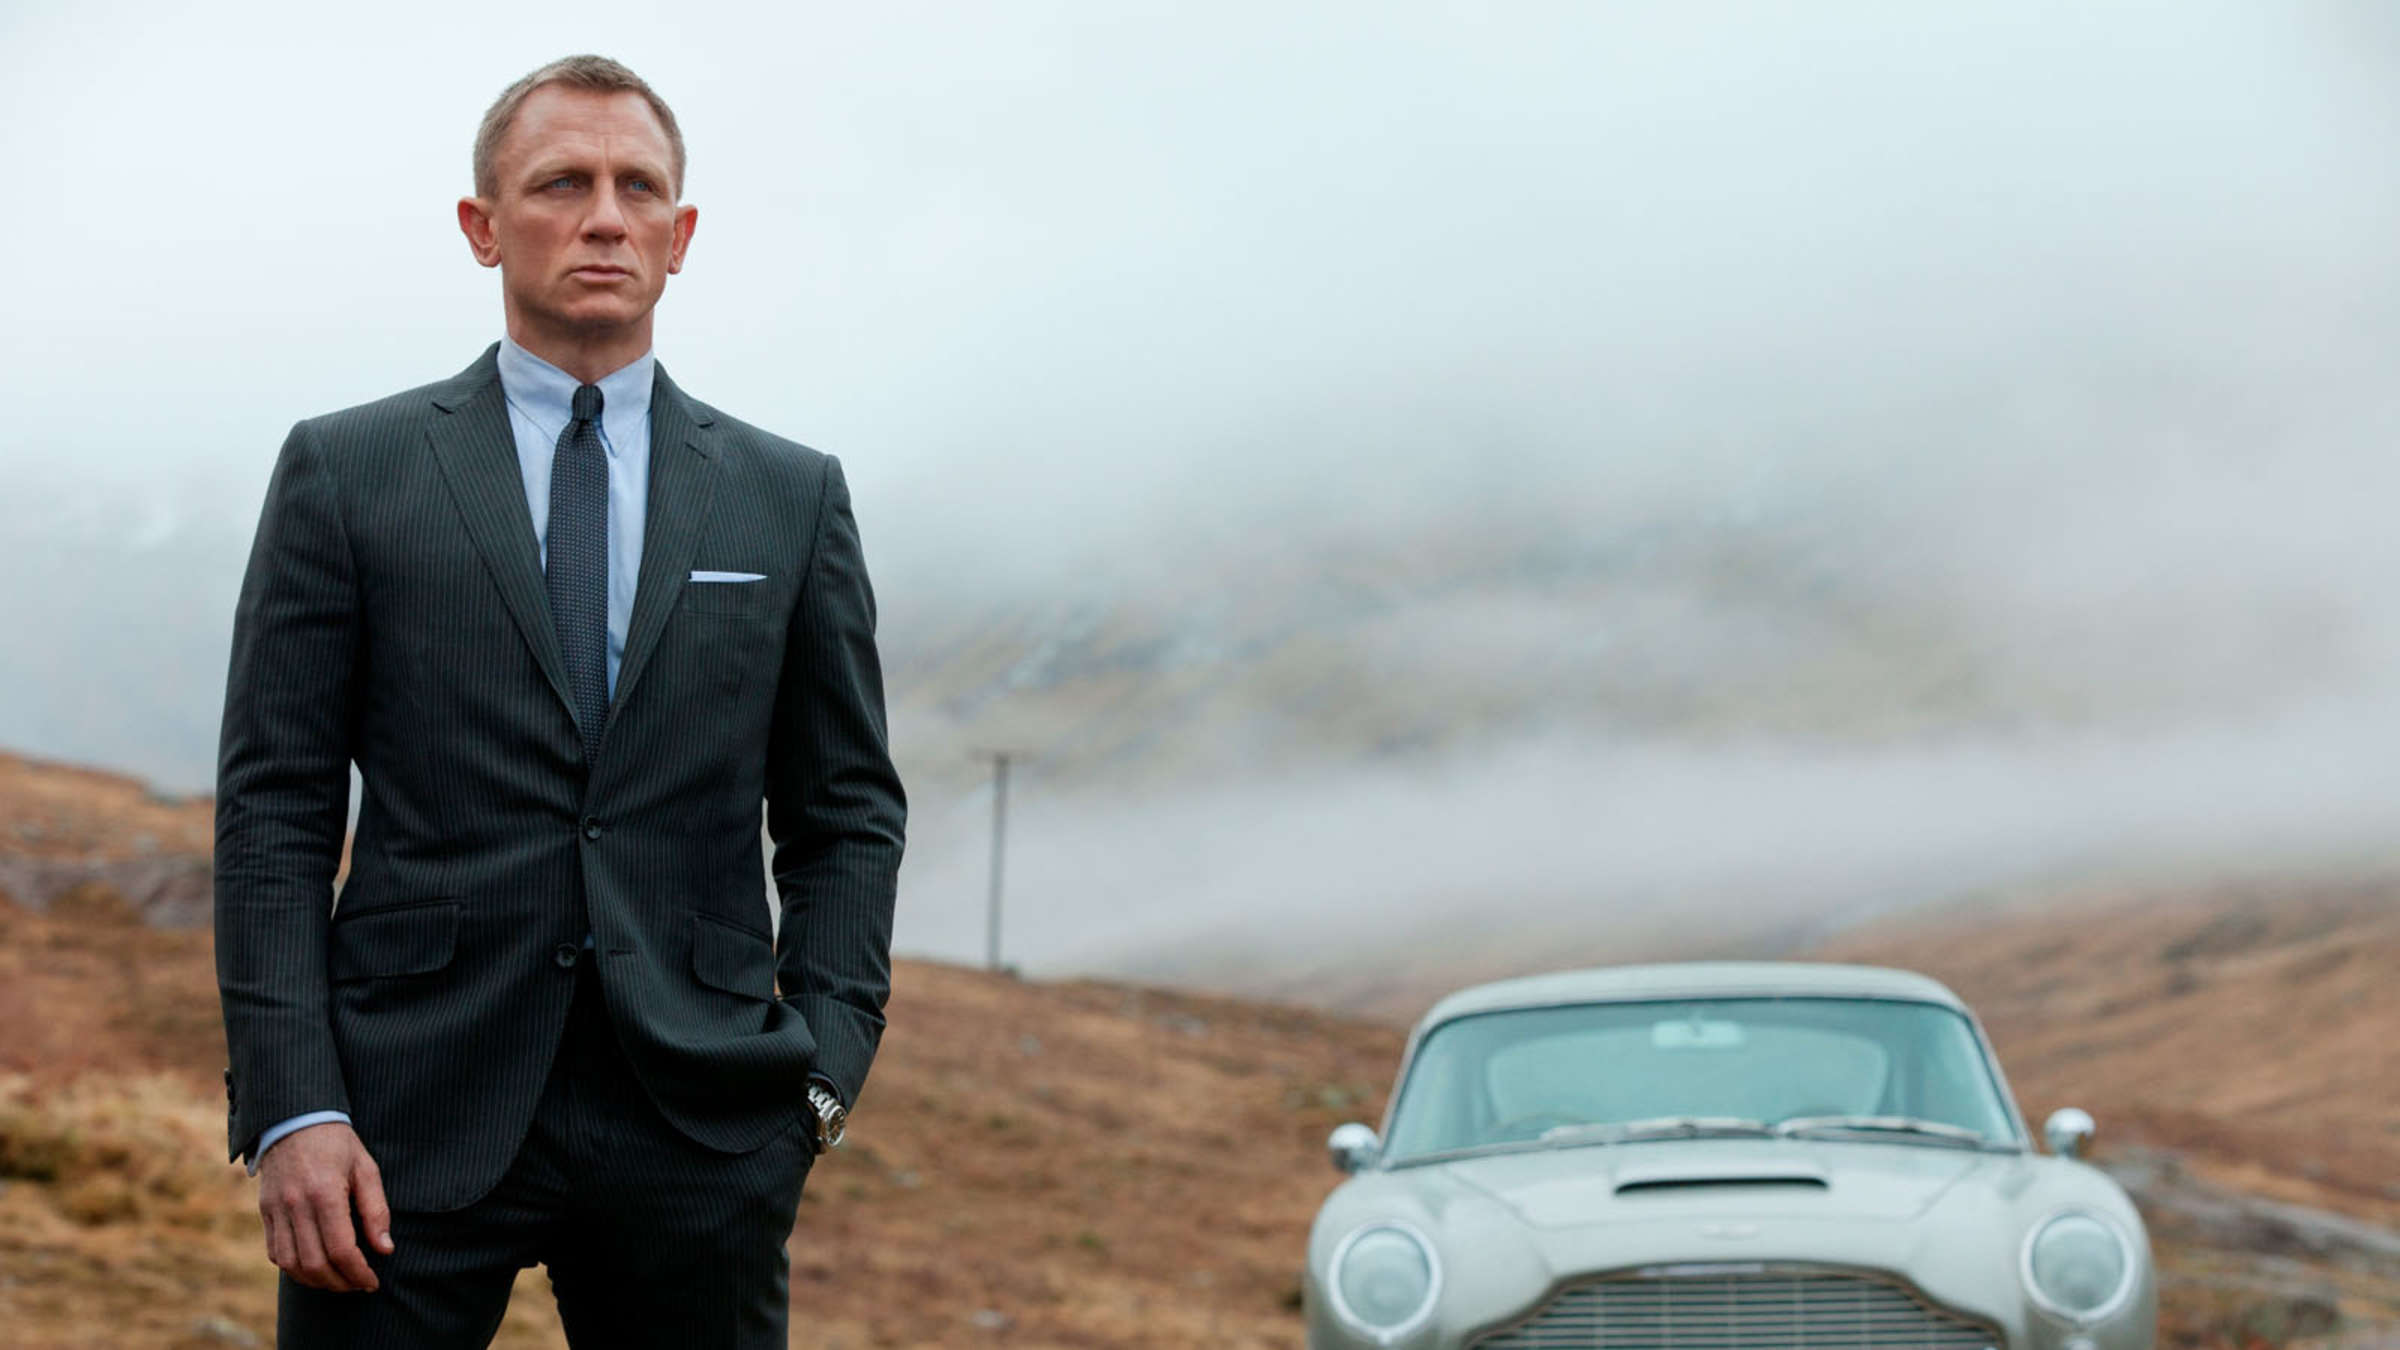 Daniel Craig as James Bond next to his classic Aston Martin in Skyfall.